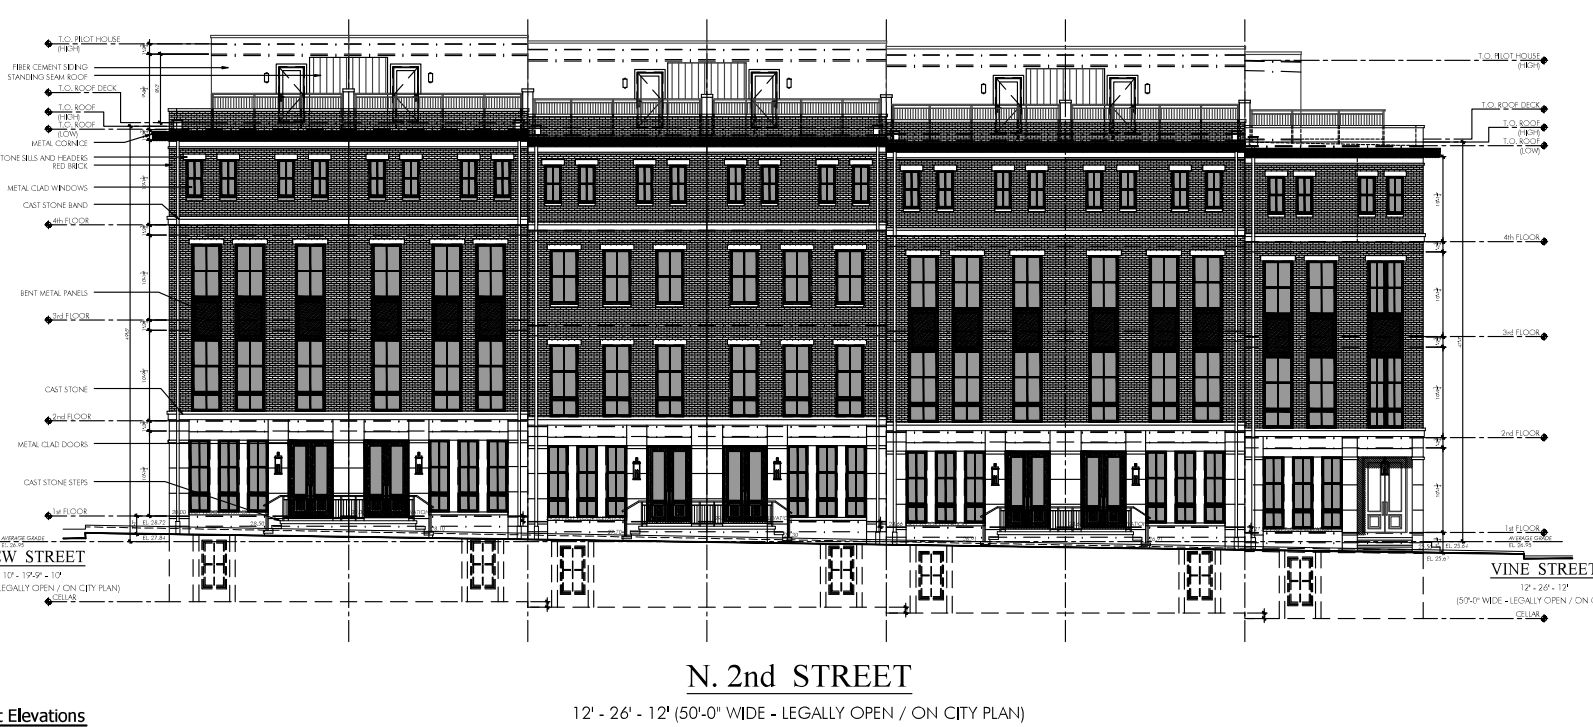 244-58 North 2nd Street. Credit: LandMark Architectural Design LLC via the City of Philadelphia